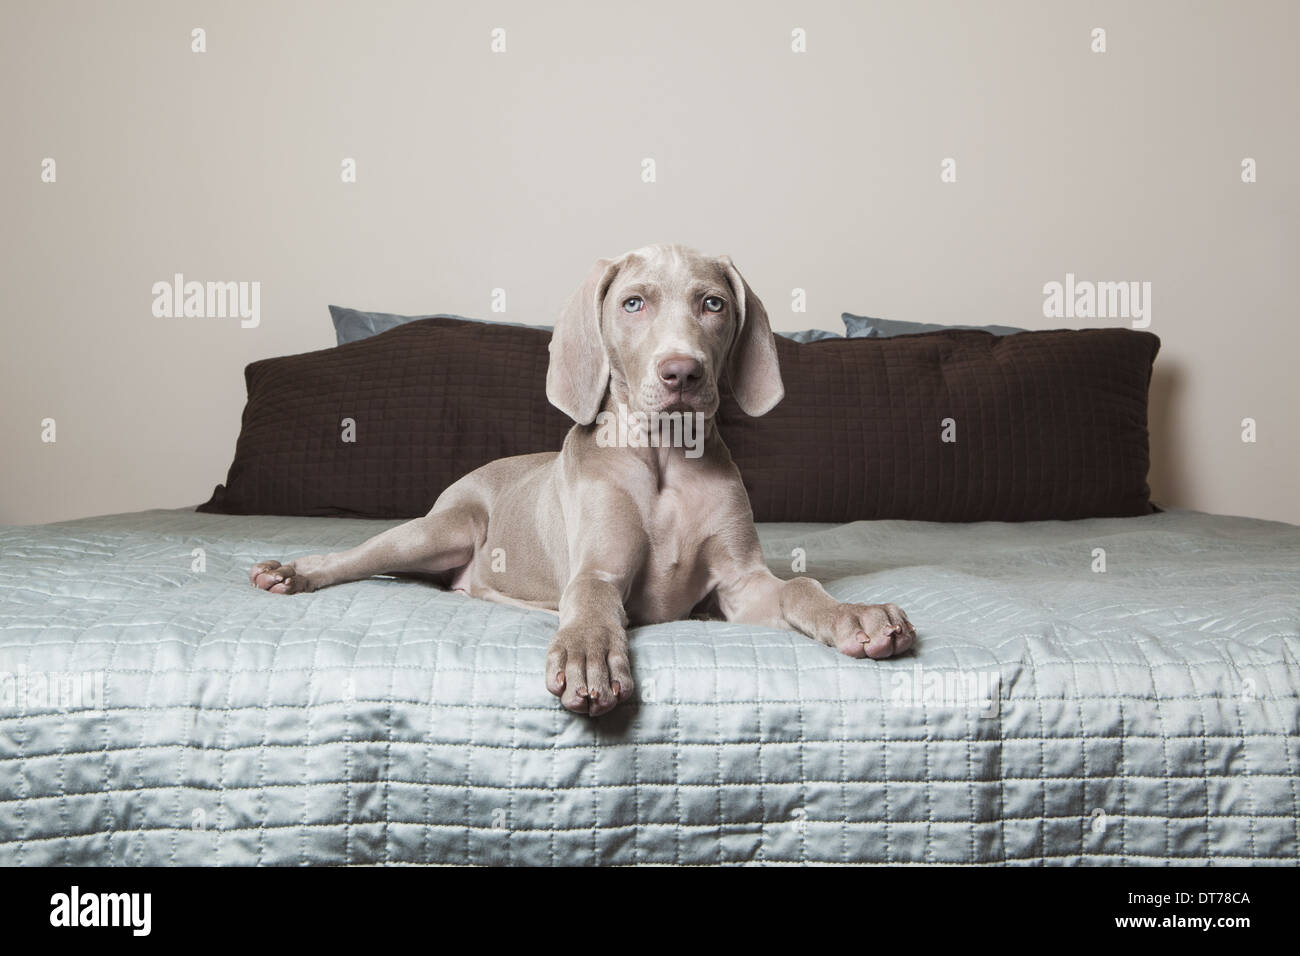 A Weimaraner puppy sitting alert on a bed. Stock Photo